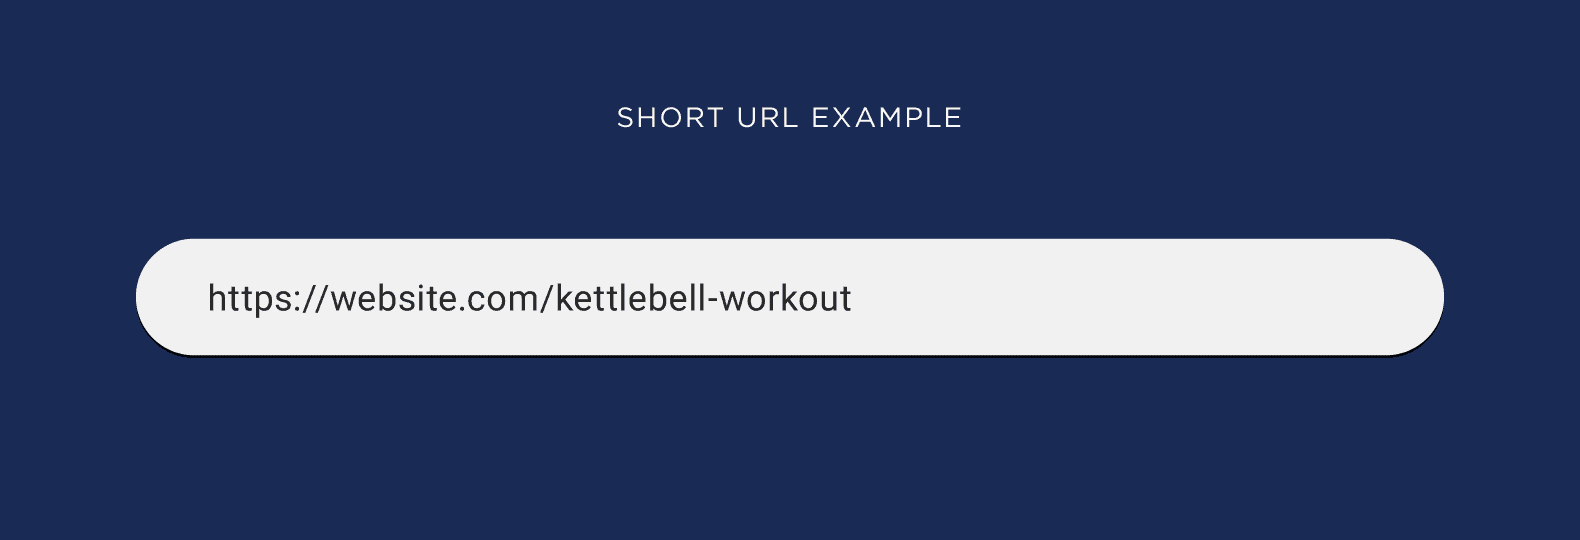 Short URL example